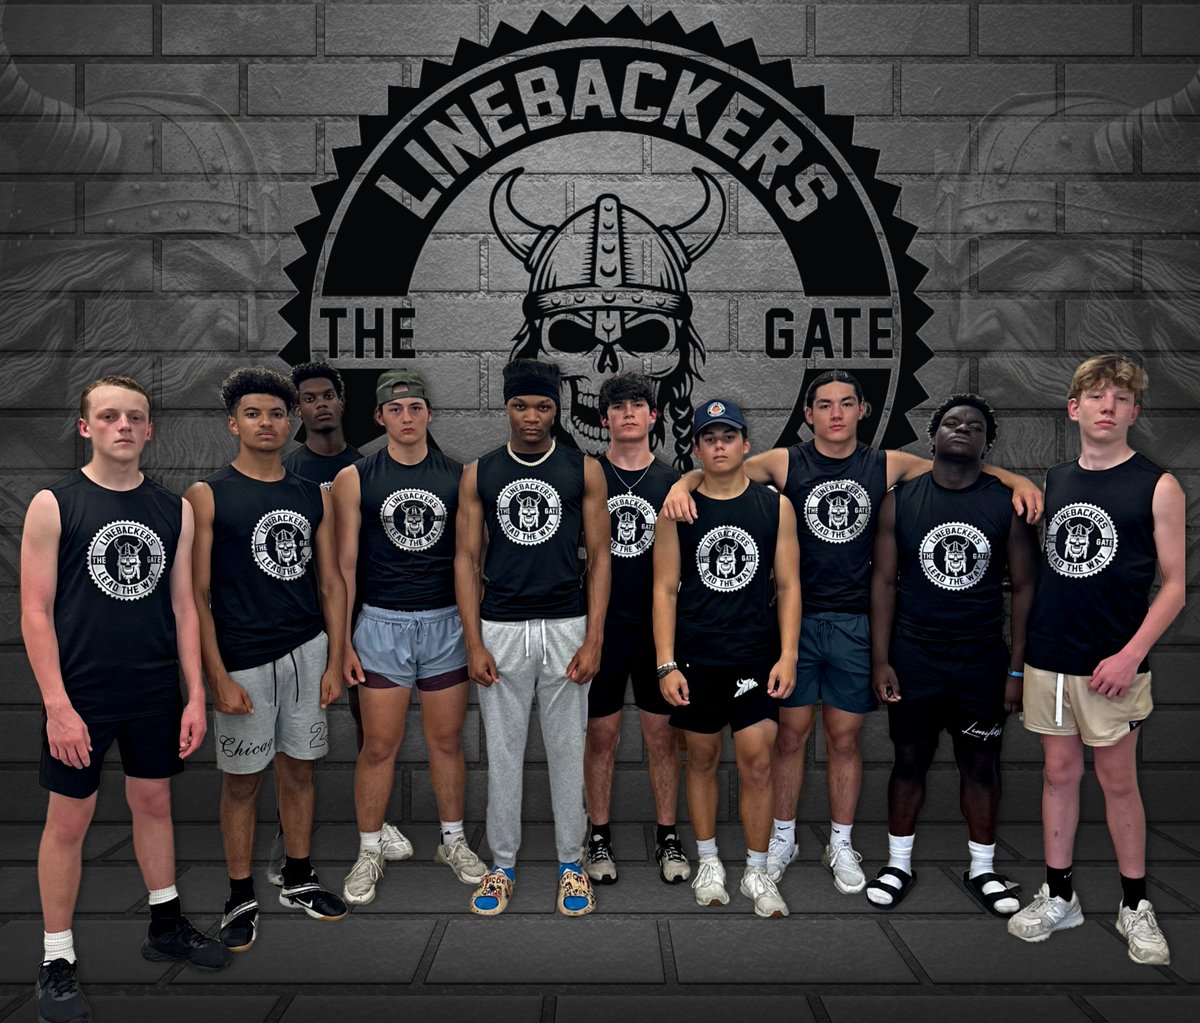 The LINEBACKER room @ngfbrecruits is locked in and prepared for spring practice next week. #Linebackers #LeadTheWay #DaviesBackers @DaviesBrysen @RayJVargas_54 @RecruitGeorgia @kwhit4 @CoachJack19 @CoachChaseSmith @ATLFOOTBALL3 @NEGARecruits @najehwilk @baconnetworkllc